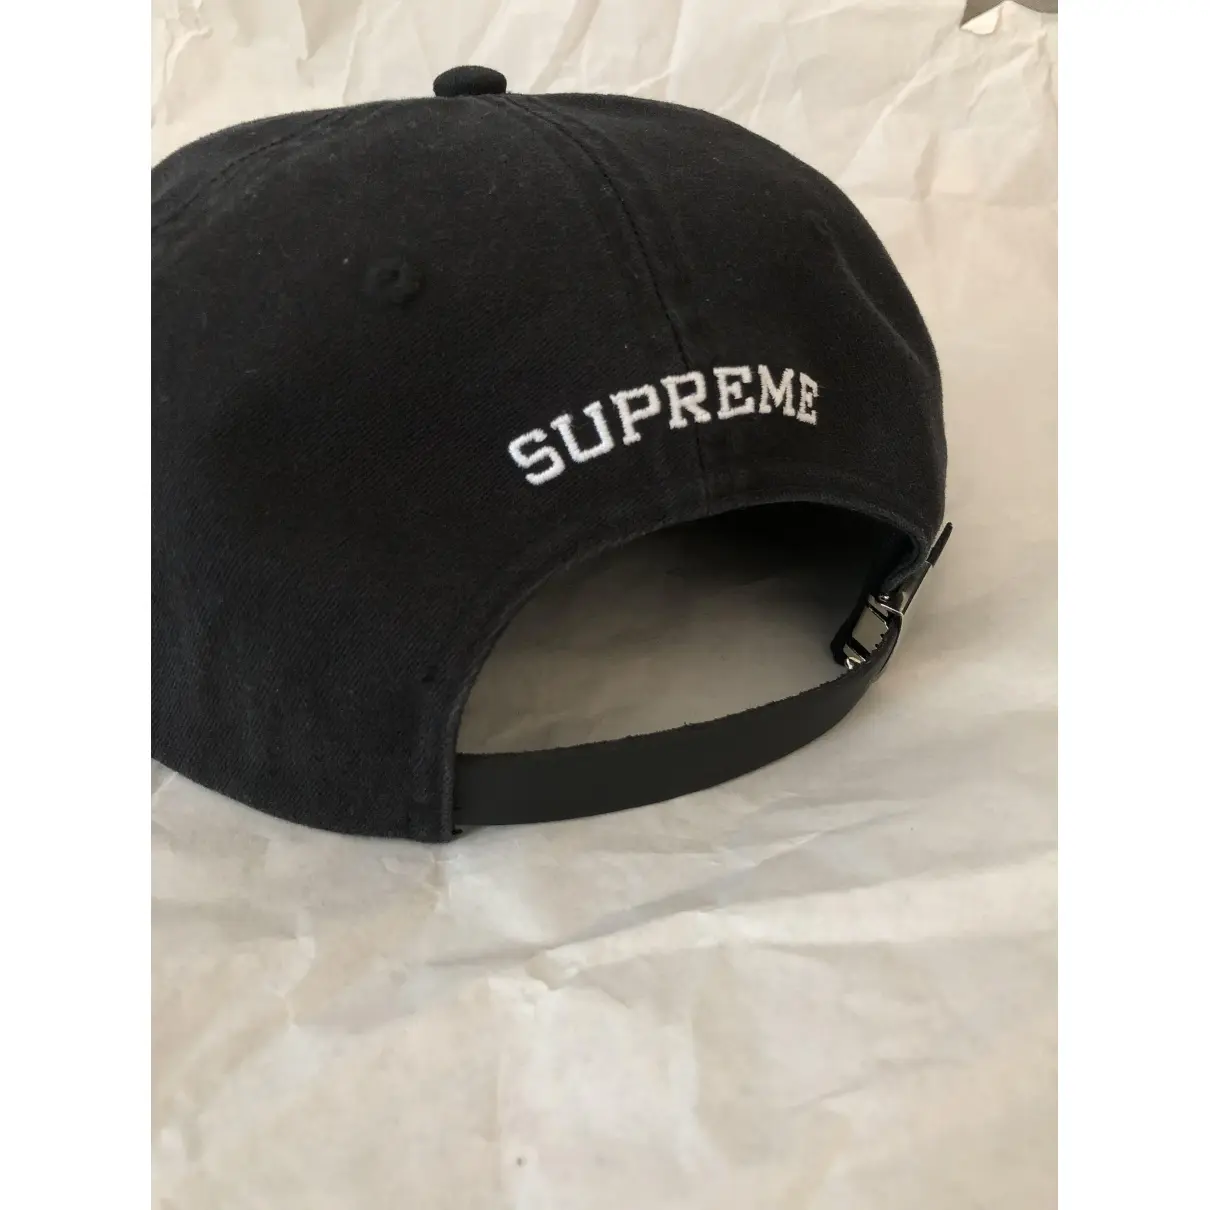 Buy SUPREME X TIMBERLAND Hat online